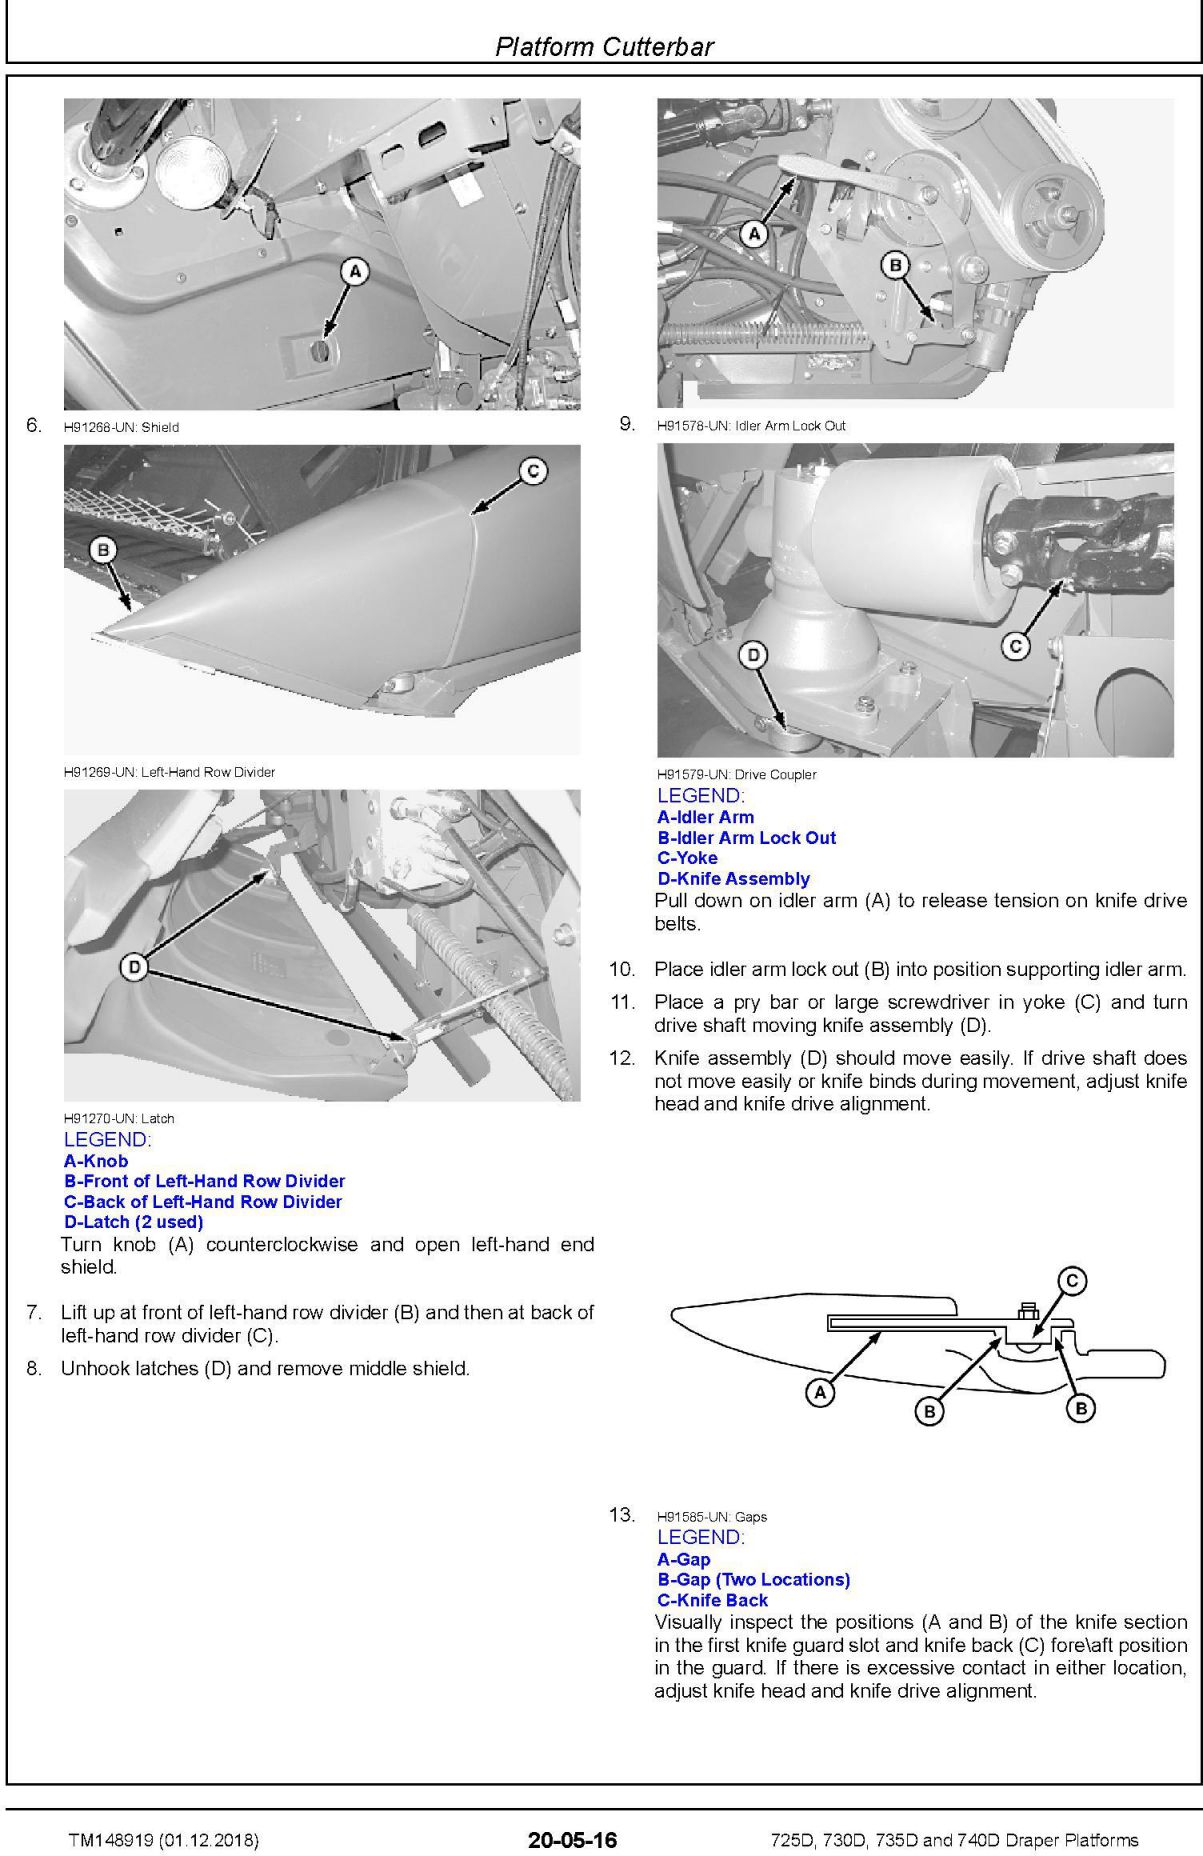 John Deere 725D to 740D Draper Platforms Technical Manual TM148919_1